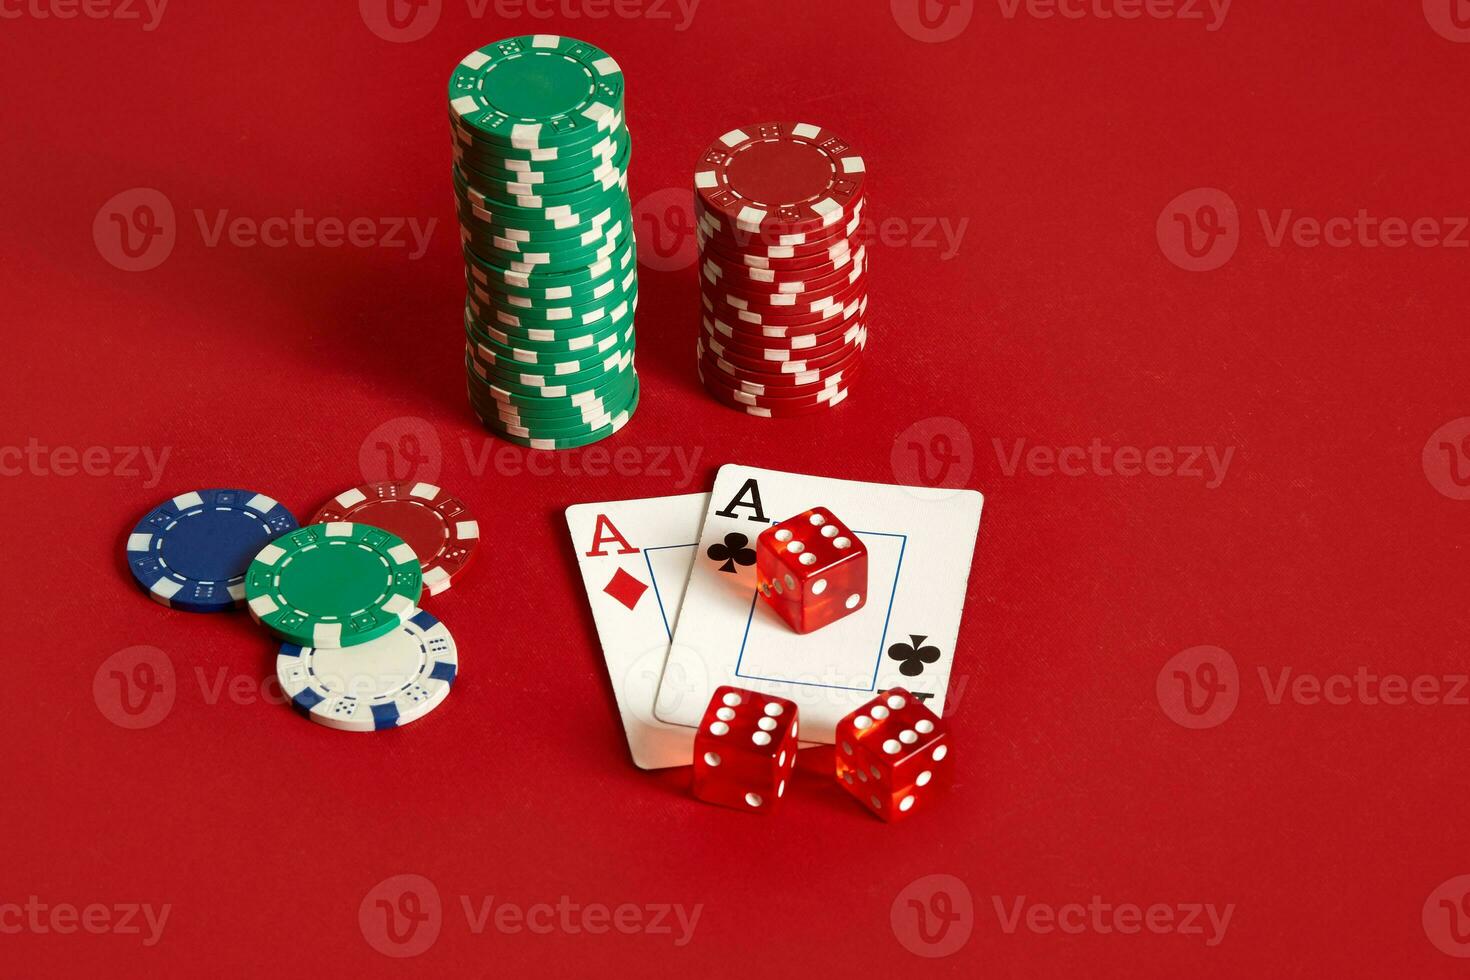 poker pommes frites och ess på röd bakgrund. grupp av annorlunda poker pommes frites. kasino bakgrund. foto